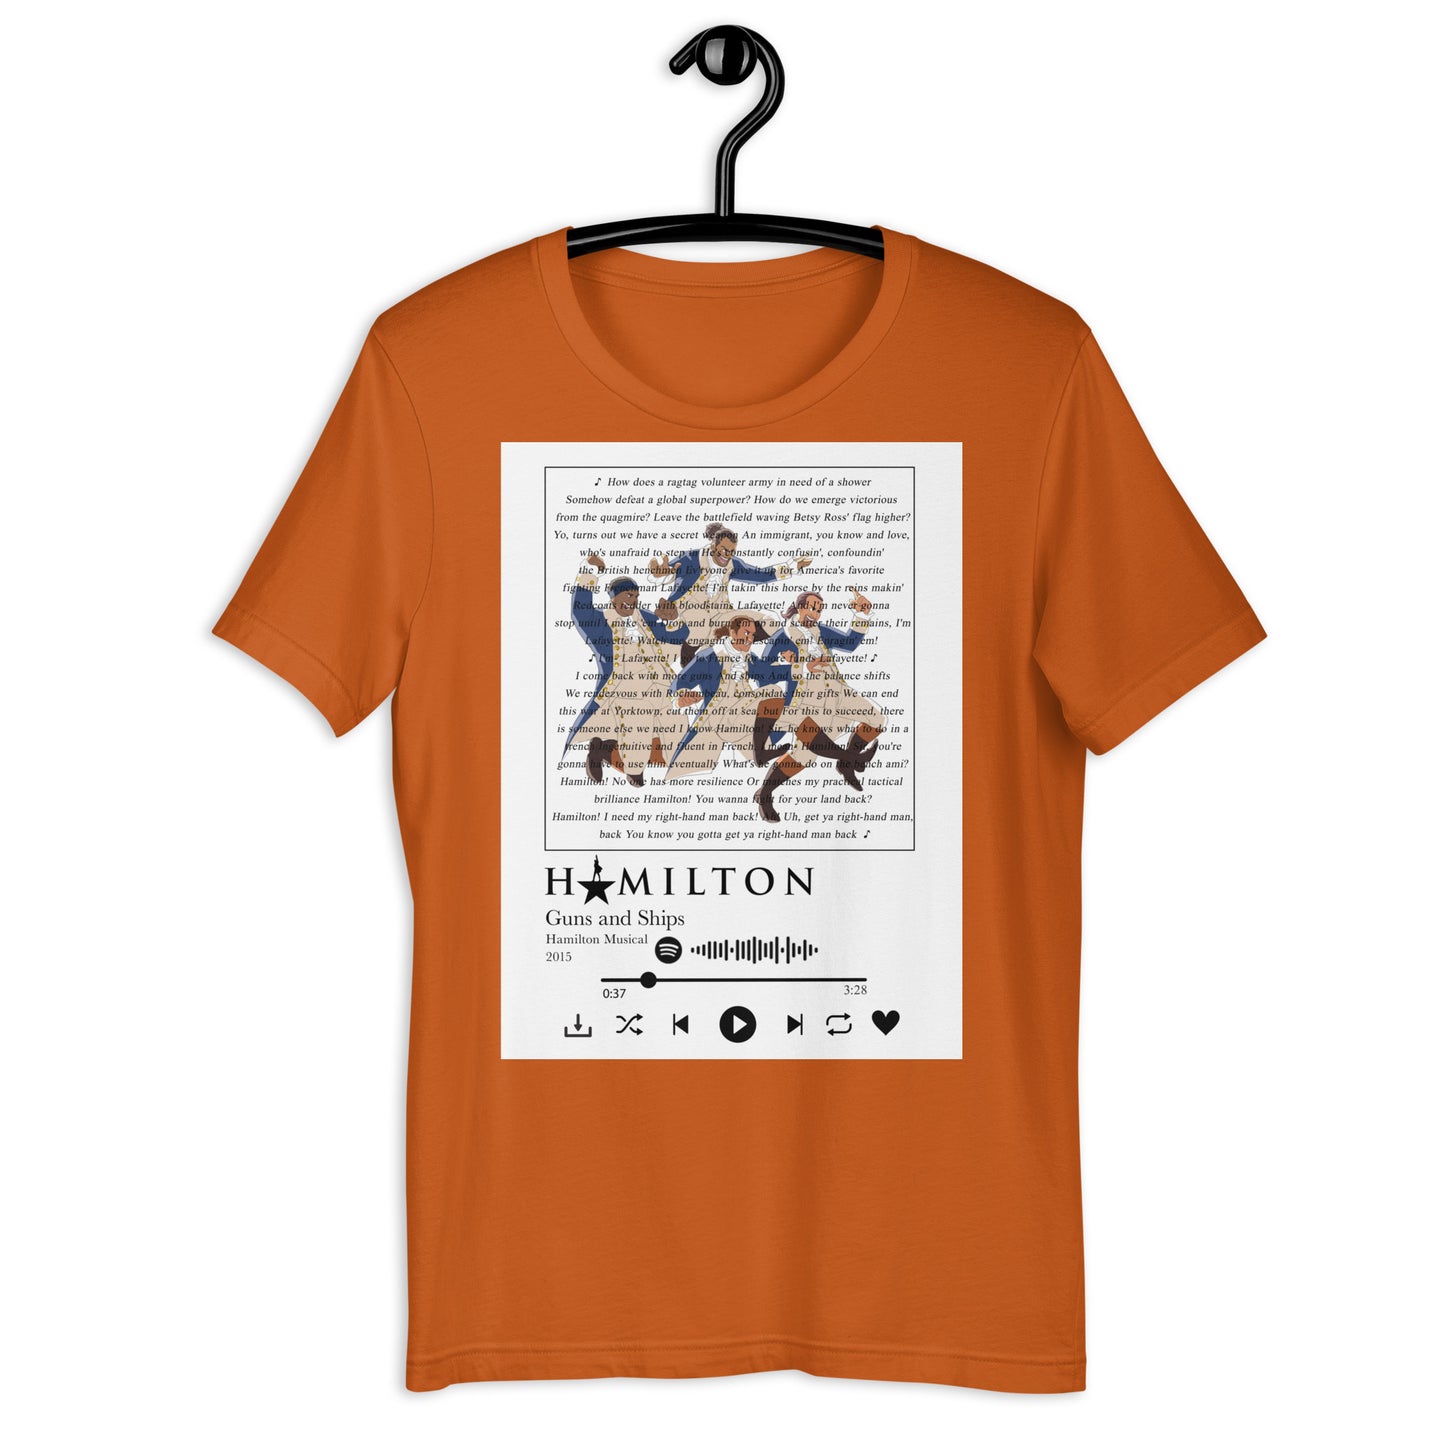 Hamilton Unisex t-shirt